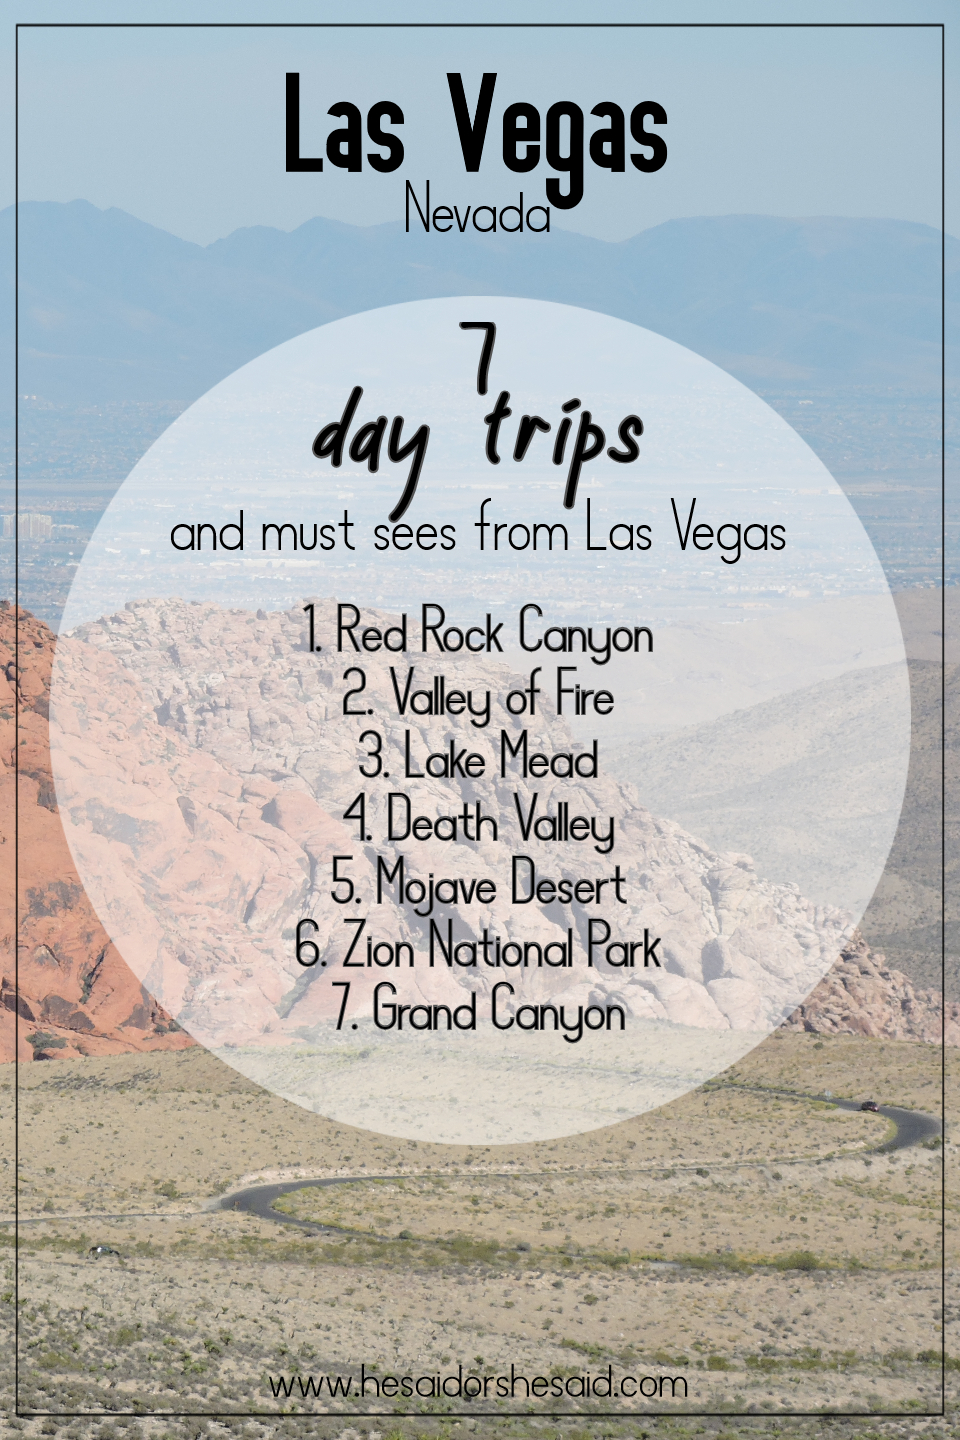 Las Vegas 7 day trips Pinterest - Kopie